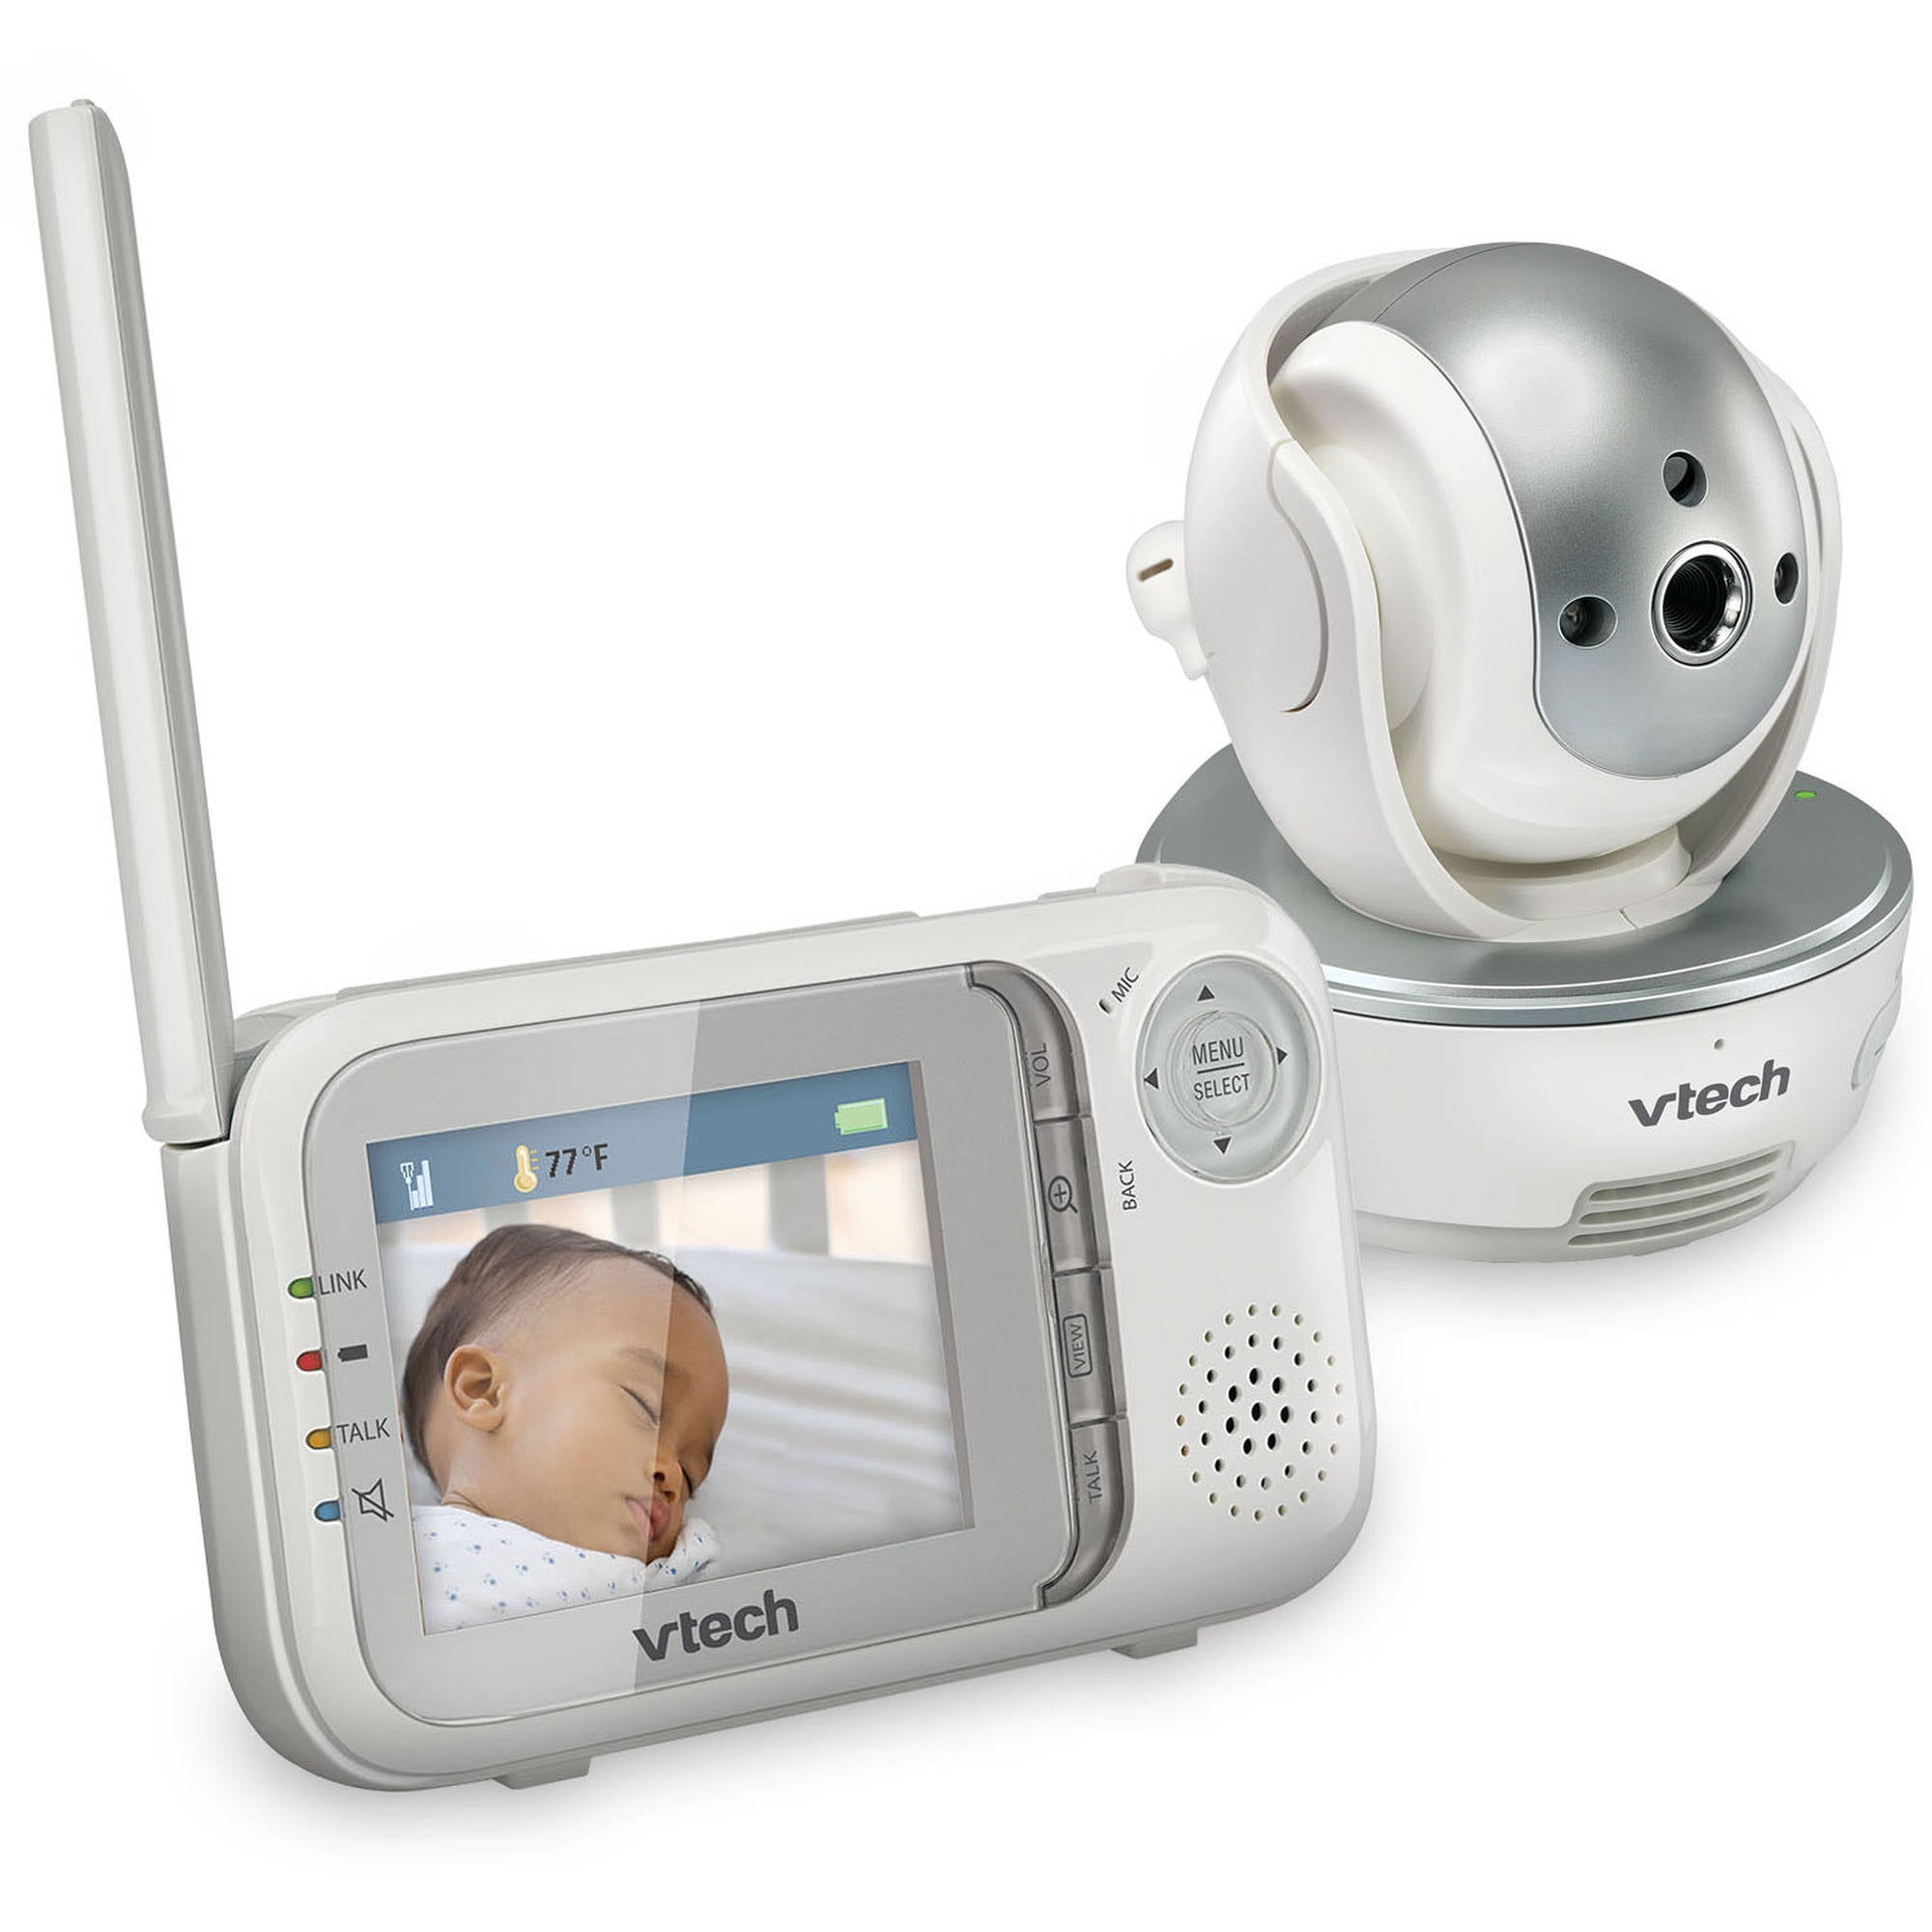 Vtech Vm333 Video Baby Monitor With Night Vision Pan Tilt Camera Two Way Audio Walmart Com Walmart Com